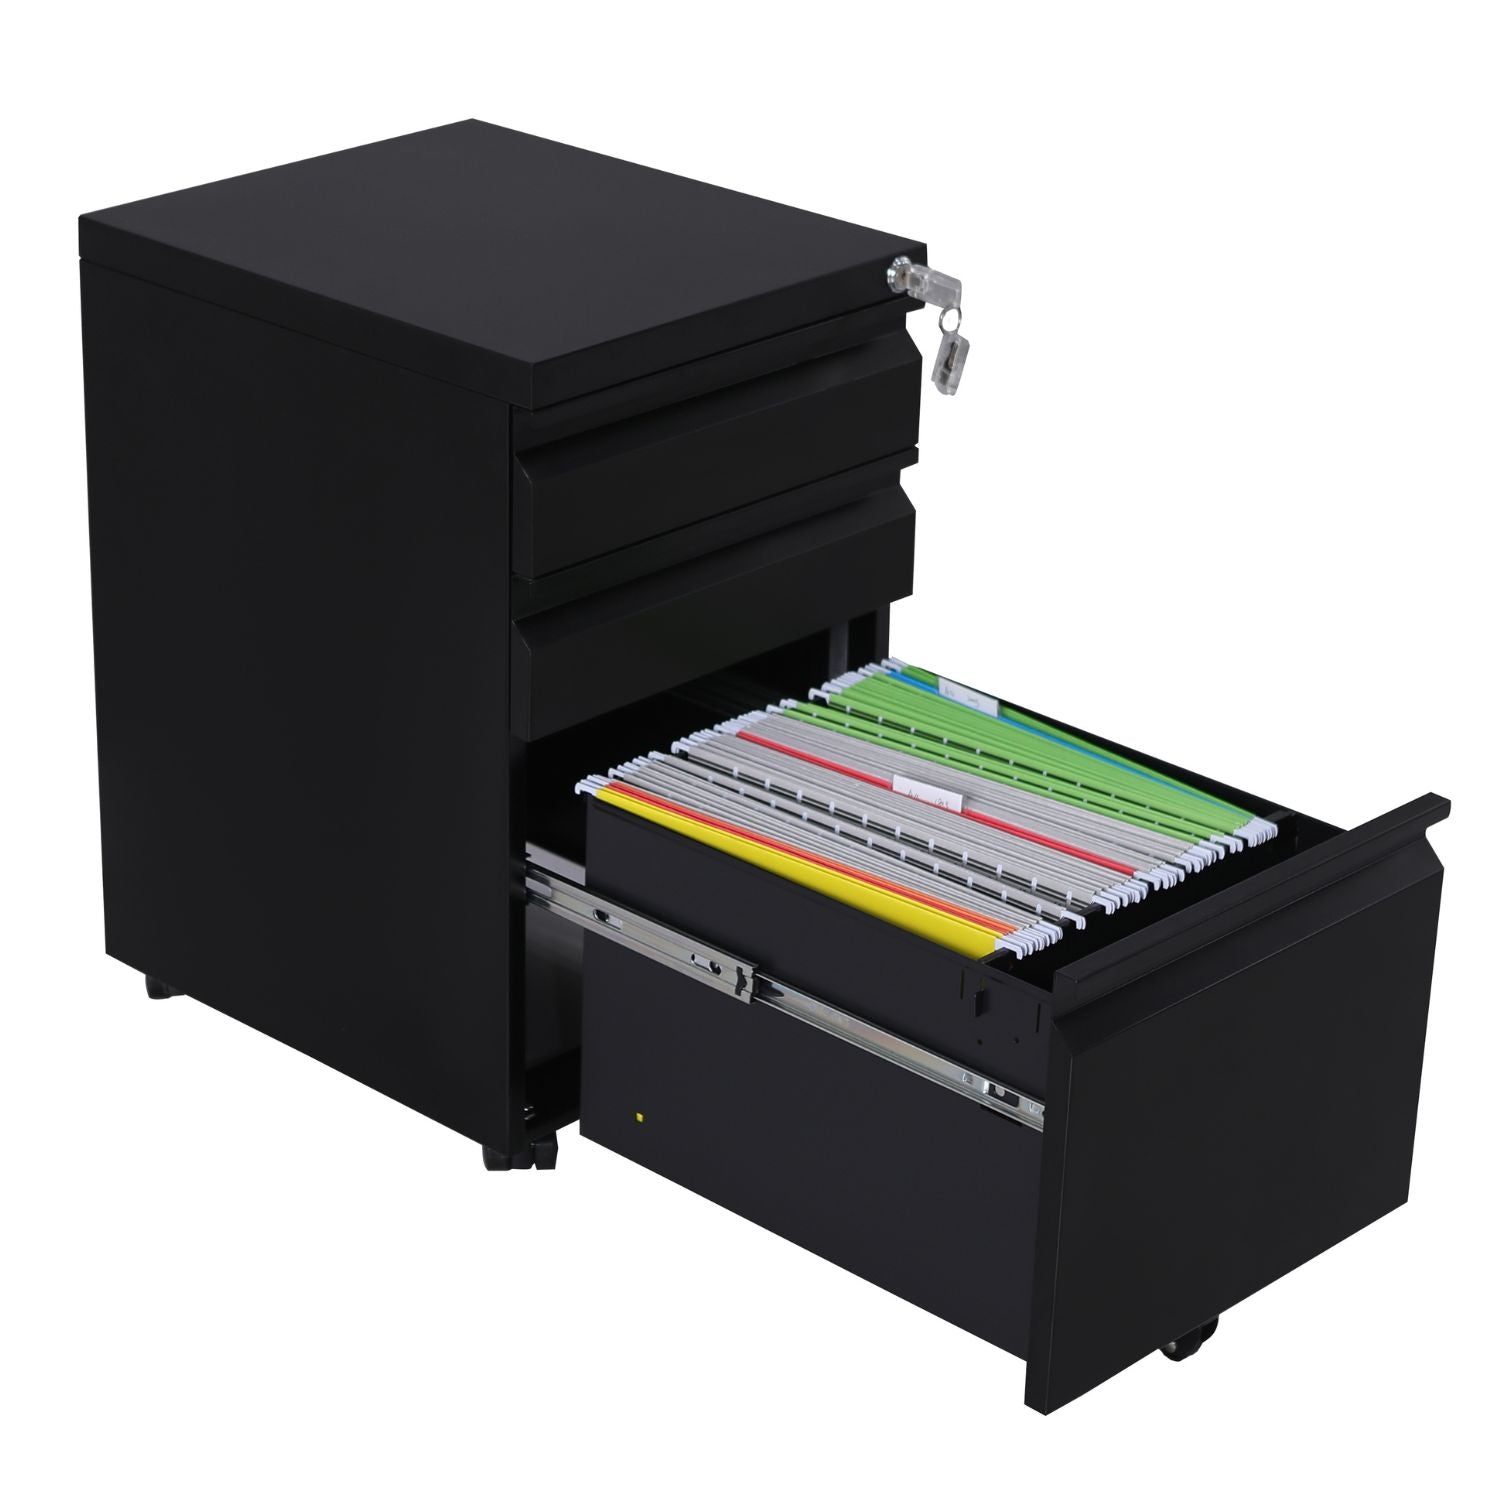 EKKIO 3 Drawer Mobile File Cabinet with Lock (Black)